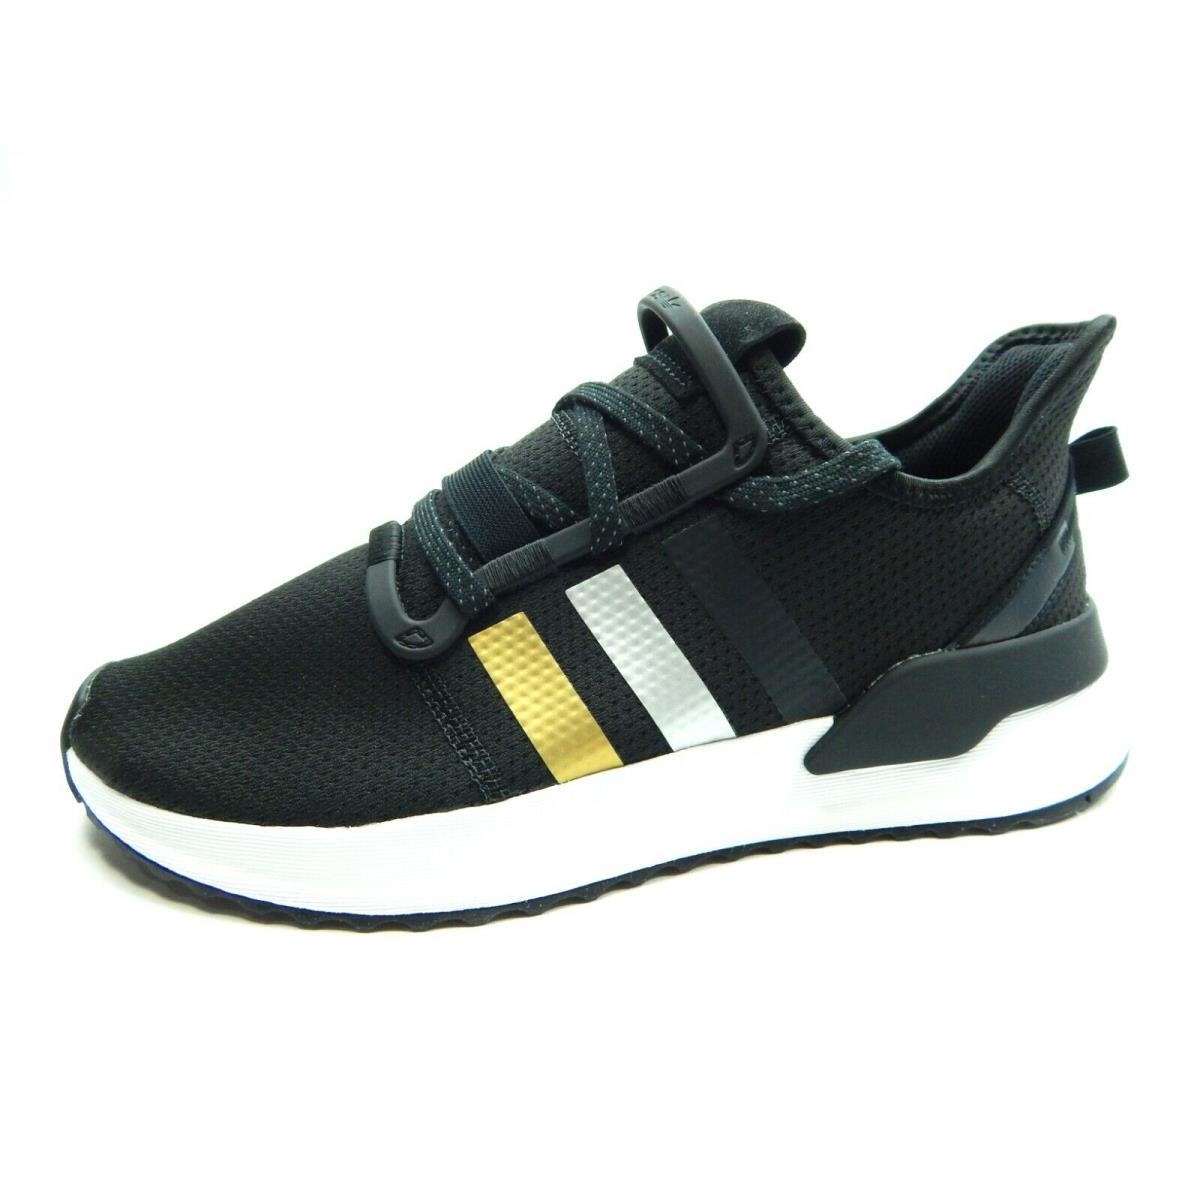 Adidas U-path Run Black Gold White Men Shoes Size 9.5 FW2323